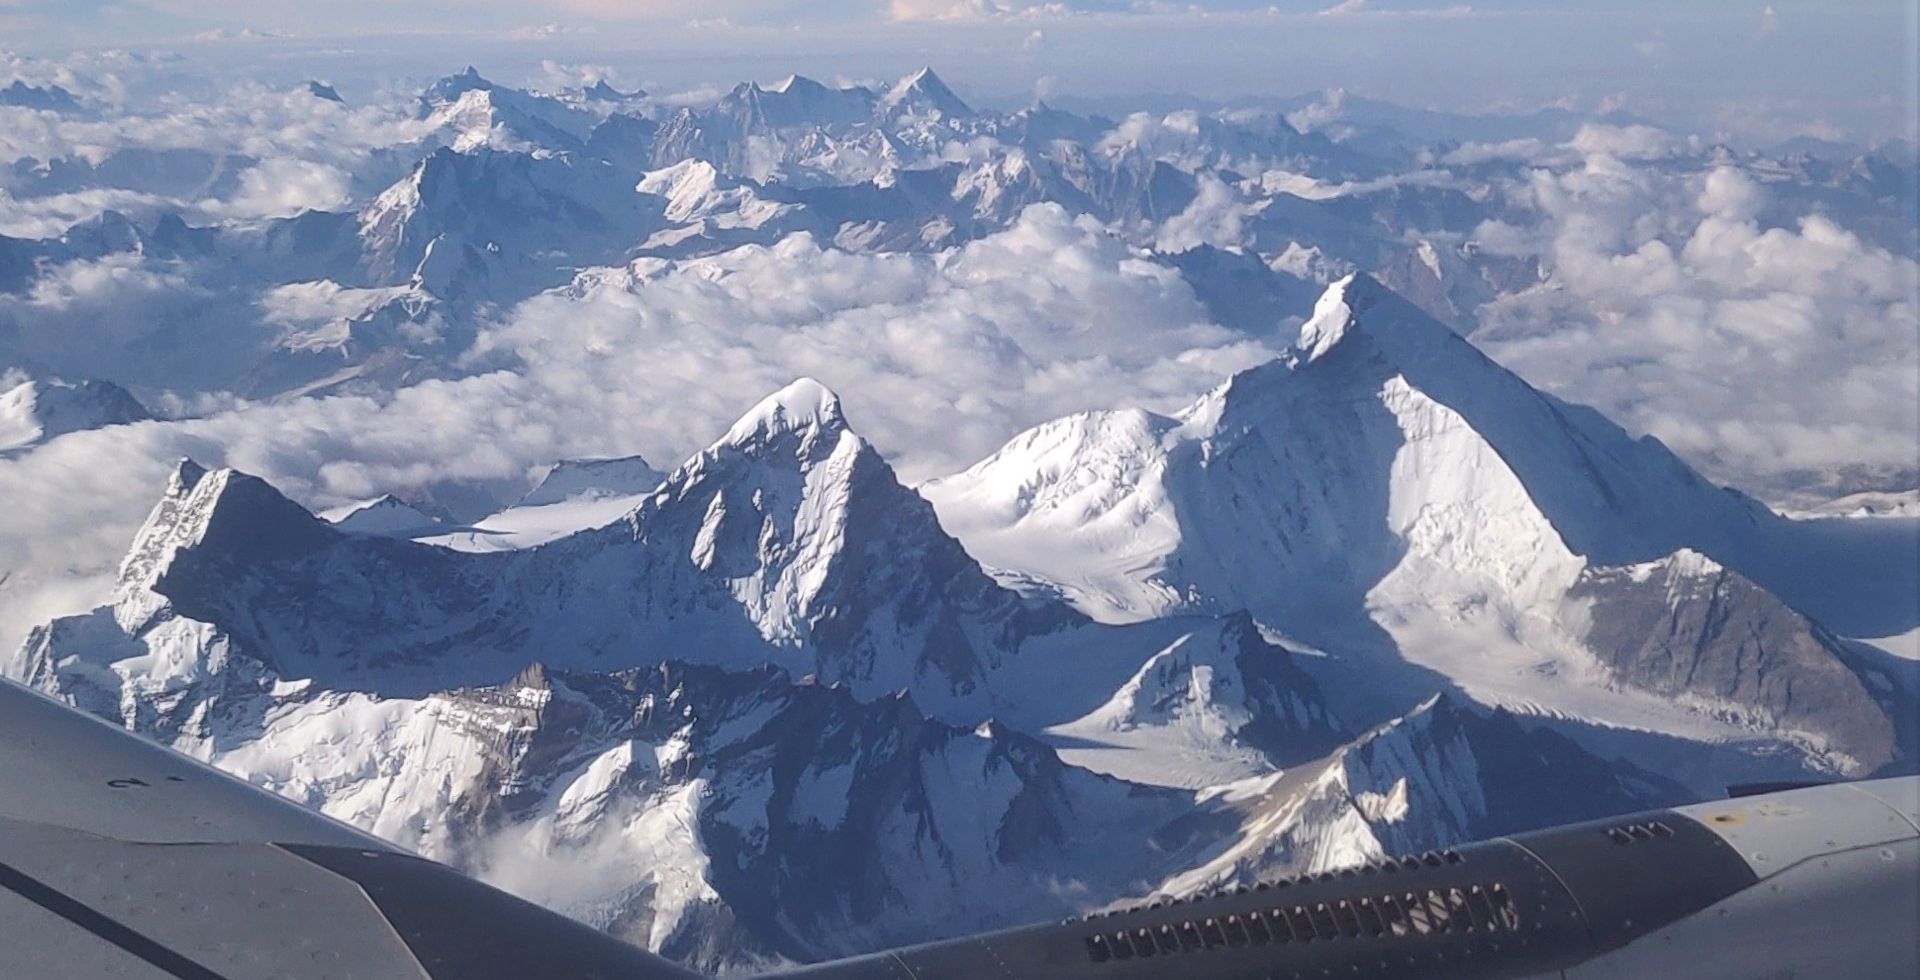 Aerial view of Nun Kun in the Indian Himalaya